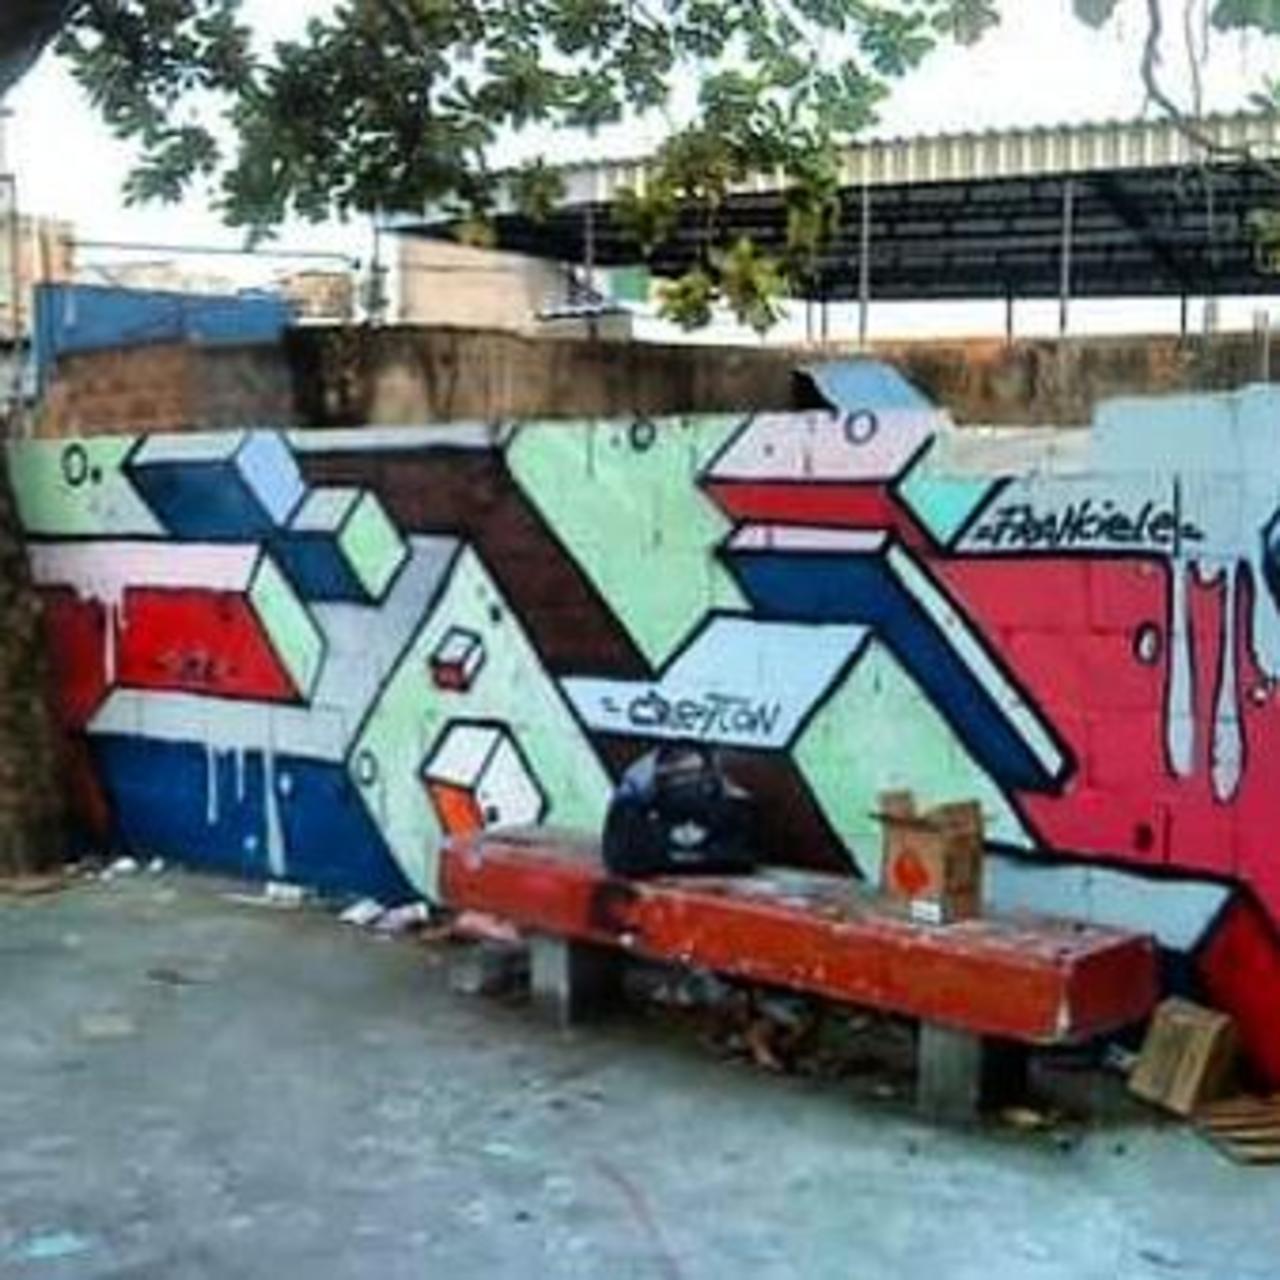 Bands auc-la22-d #graffiti #artistasurbanoscrew #streetartrio #streetart #auclassed by artistasurbanoscrew http://t.co/qCAJT70Fja